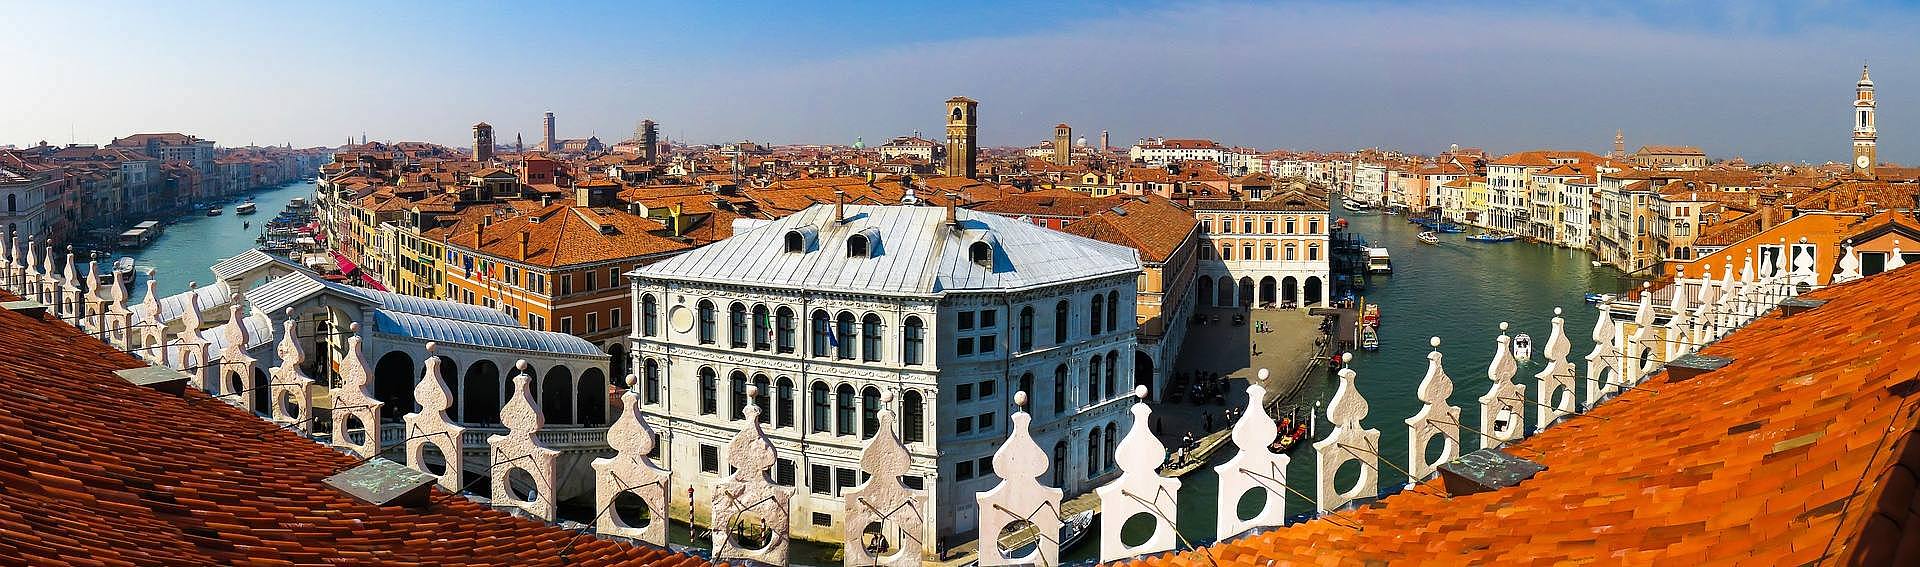 Dächer über Venedig